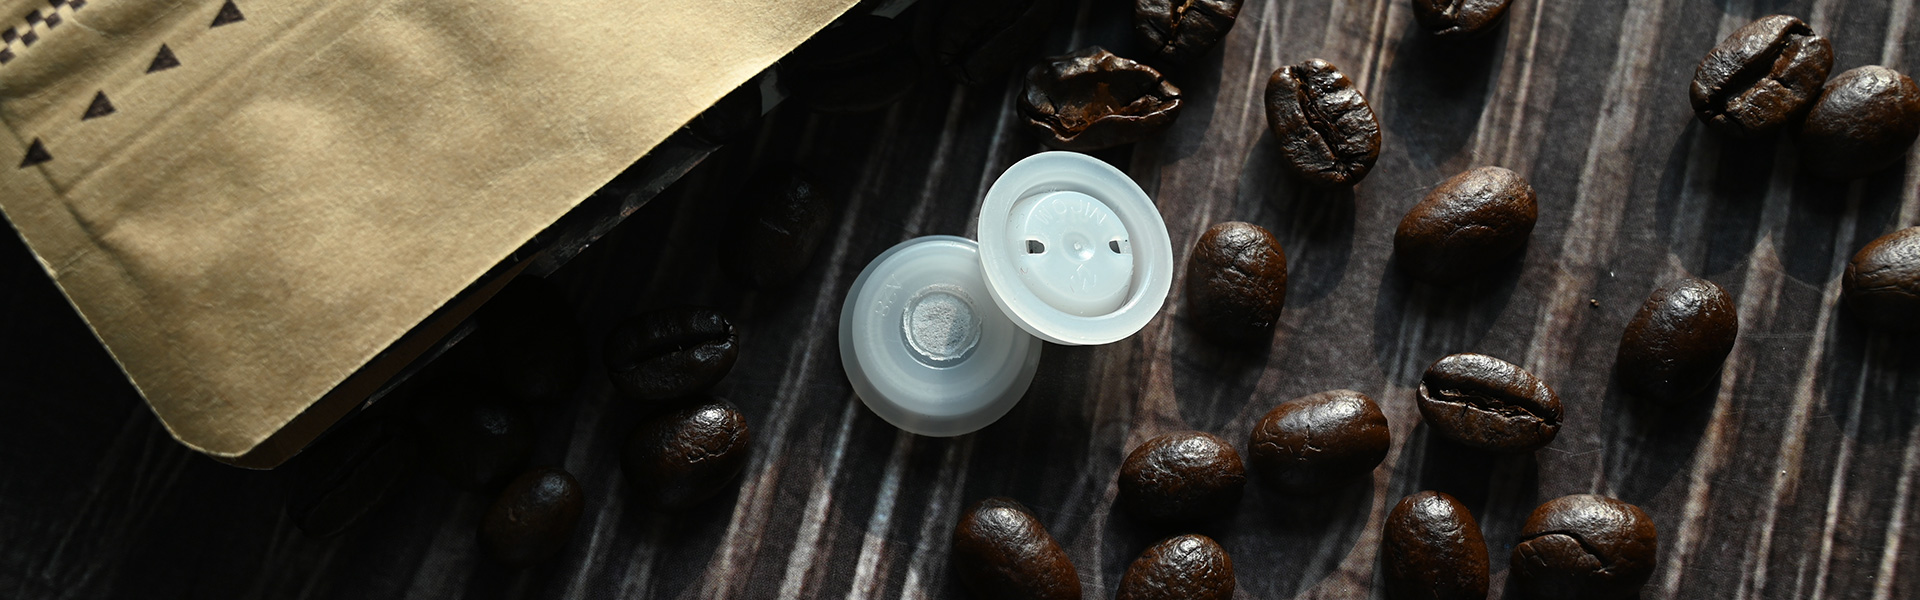 coffee valve enjoy coffee